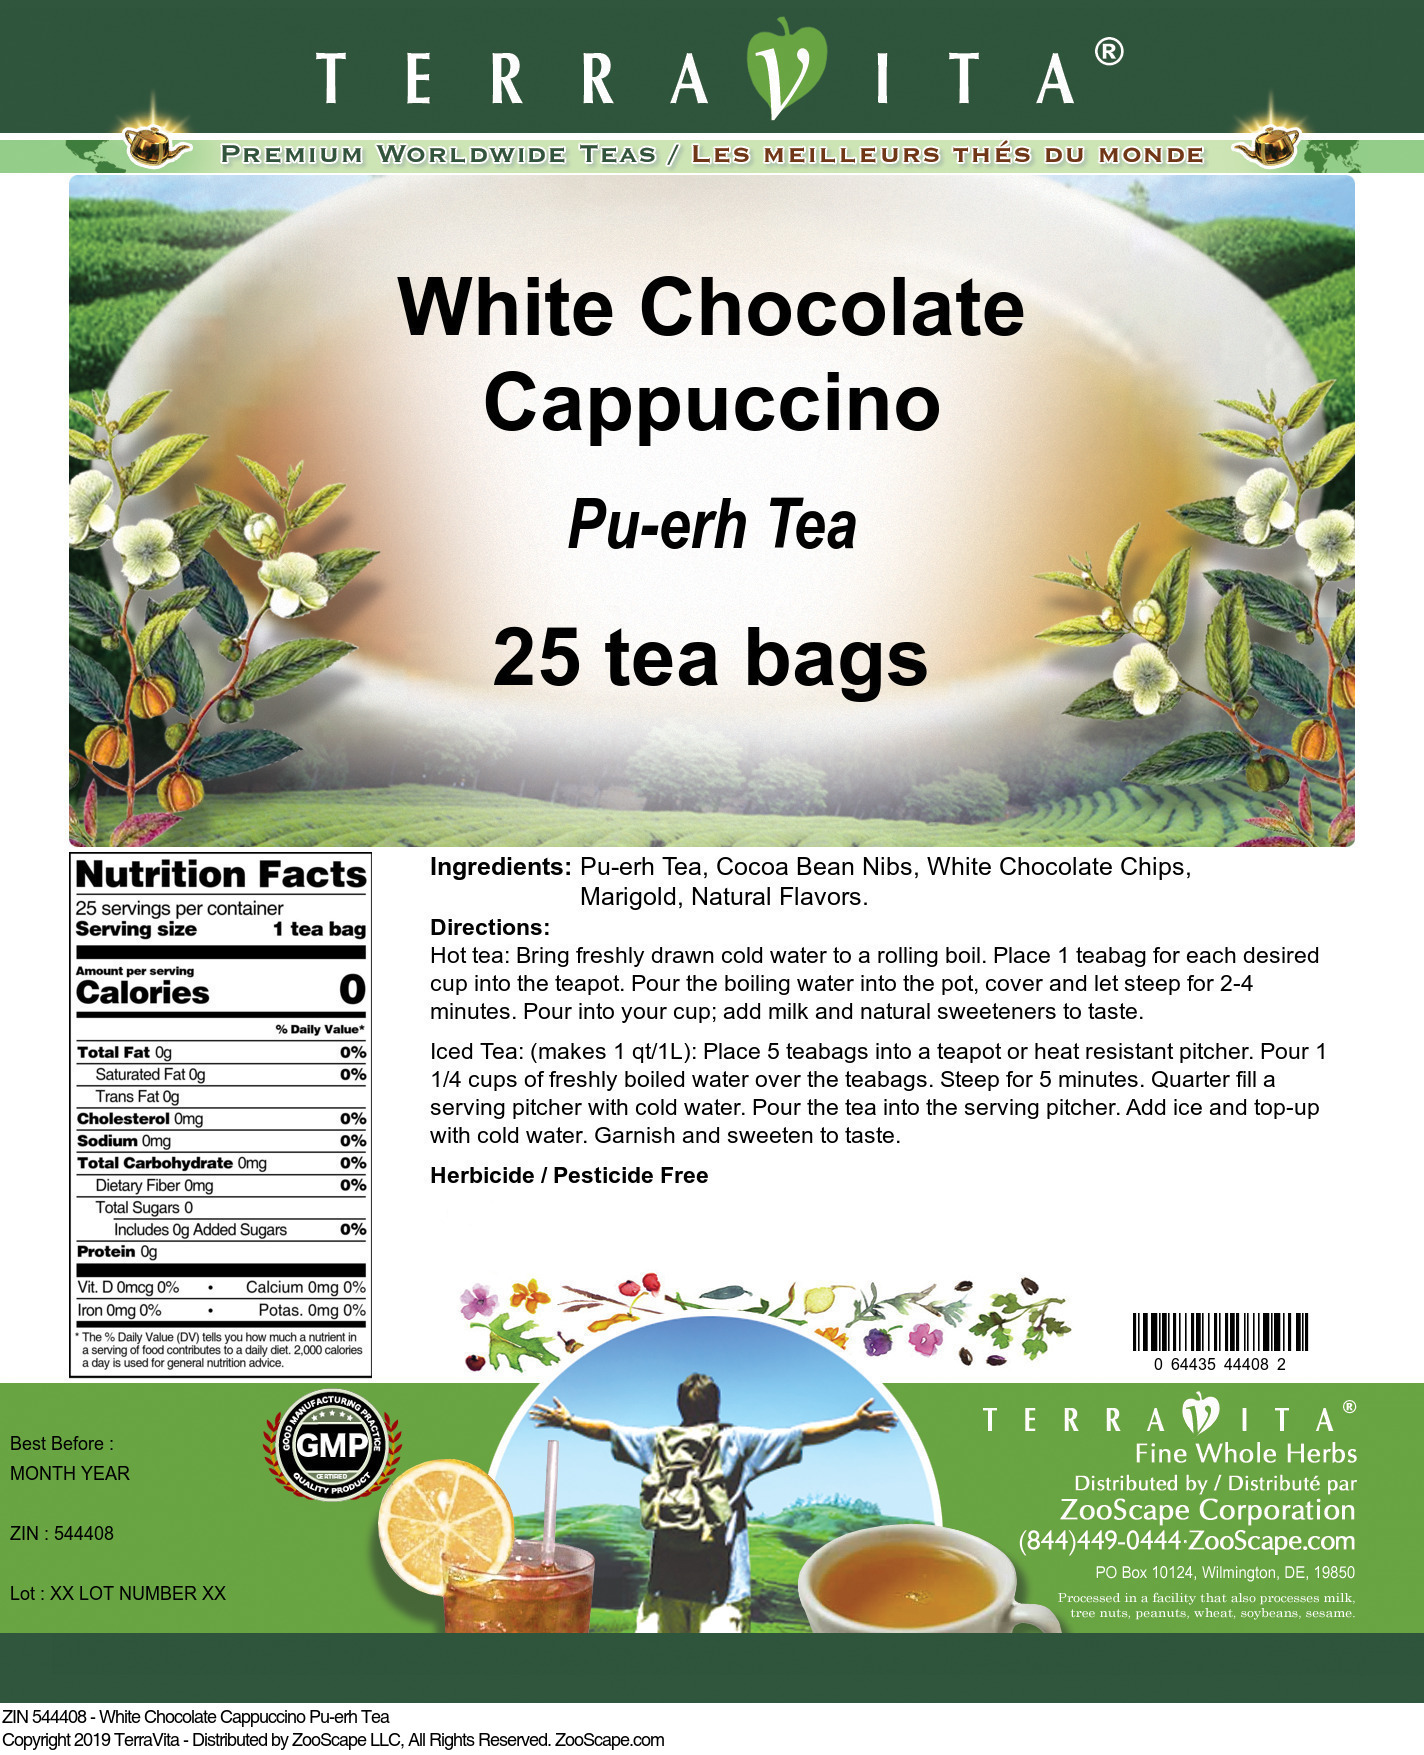 White Chocolate Cappuccino Pu-erh Tea - Label